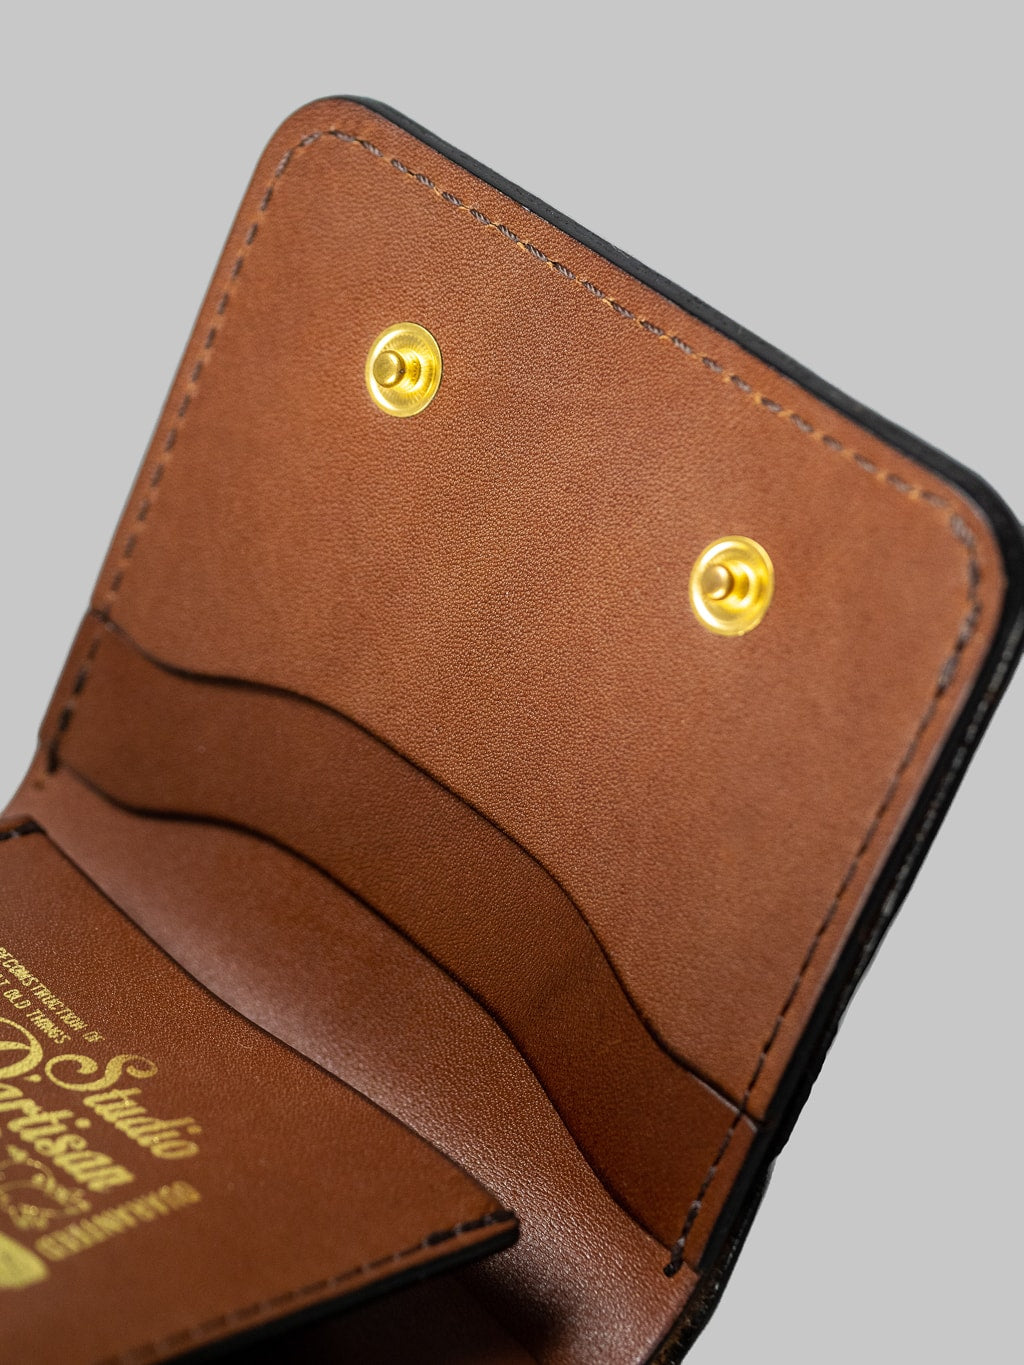 Studio Dartisan brown leather mini wallet button detail